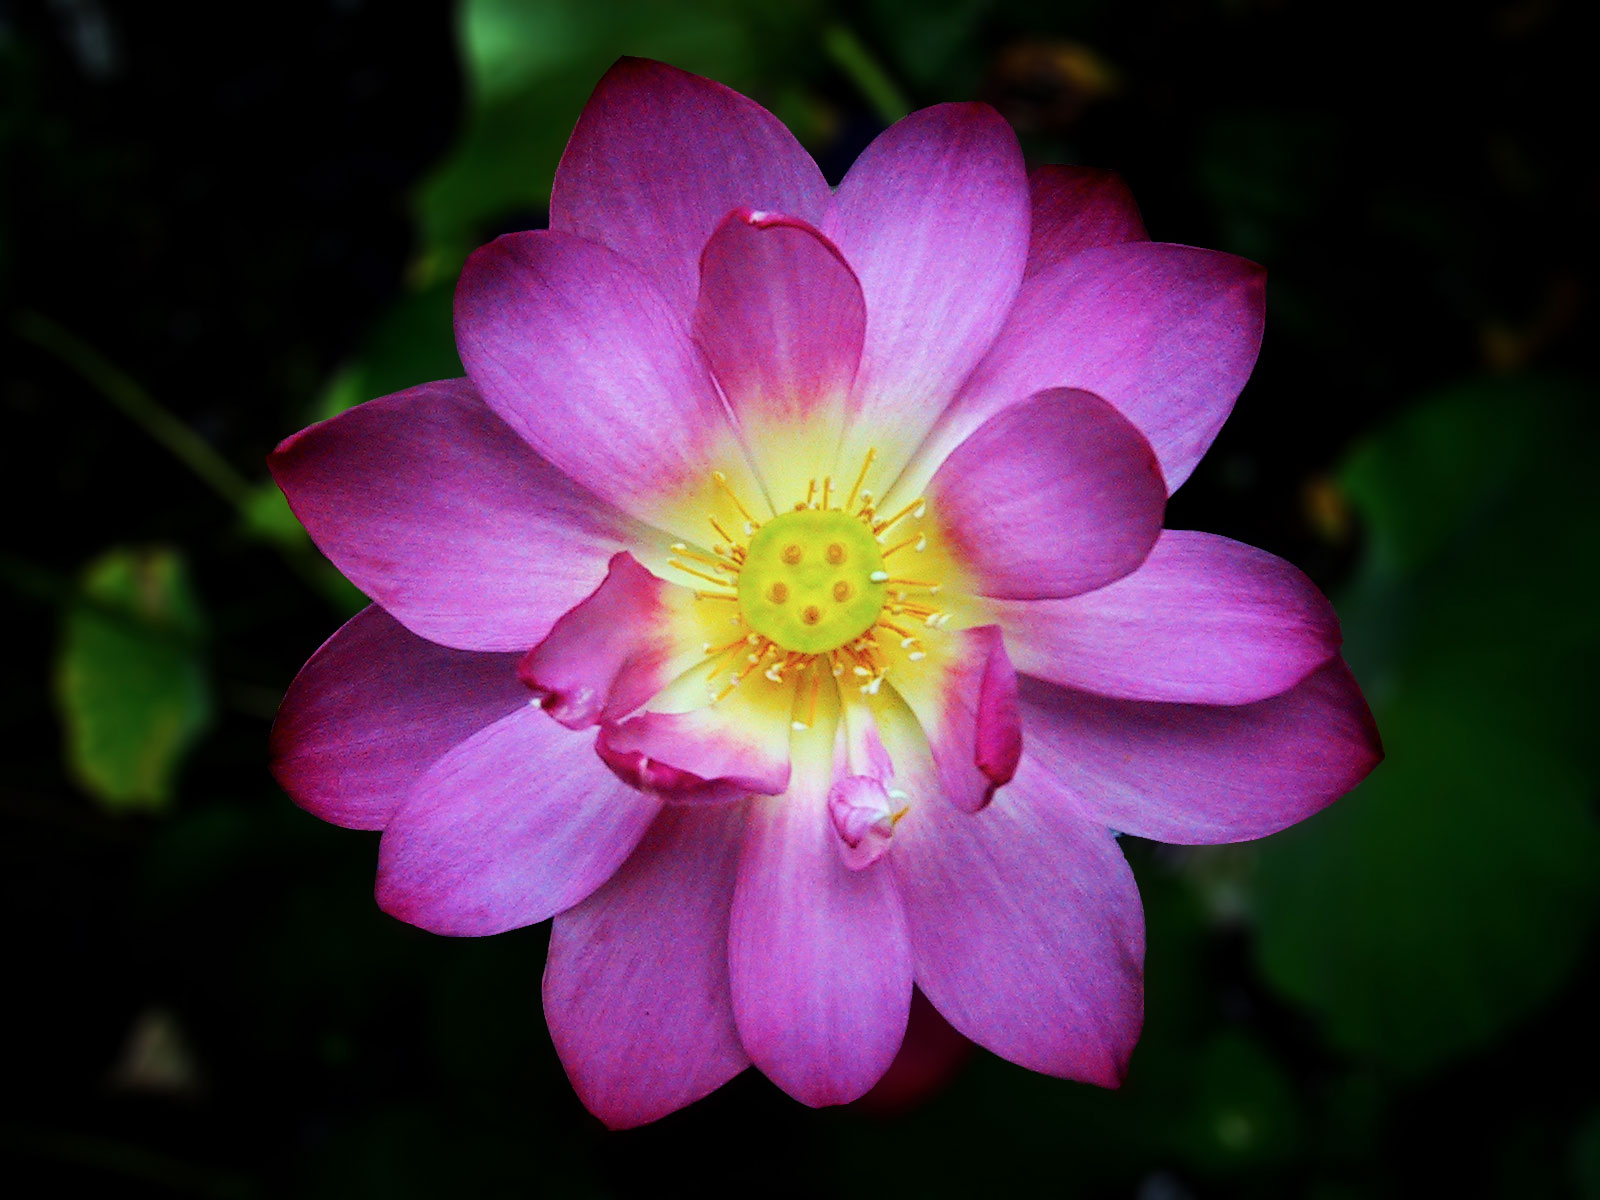 Lotus Blossom. Photo Credit: M. Tejeda-Moreno